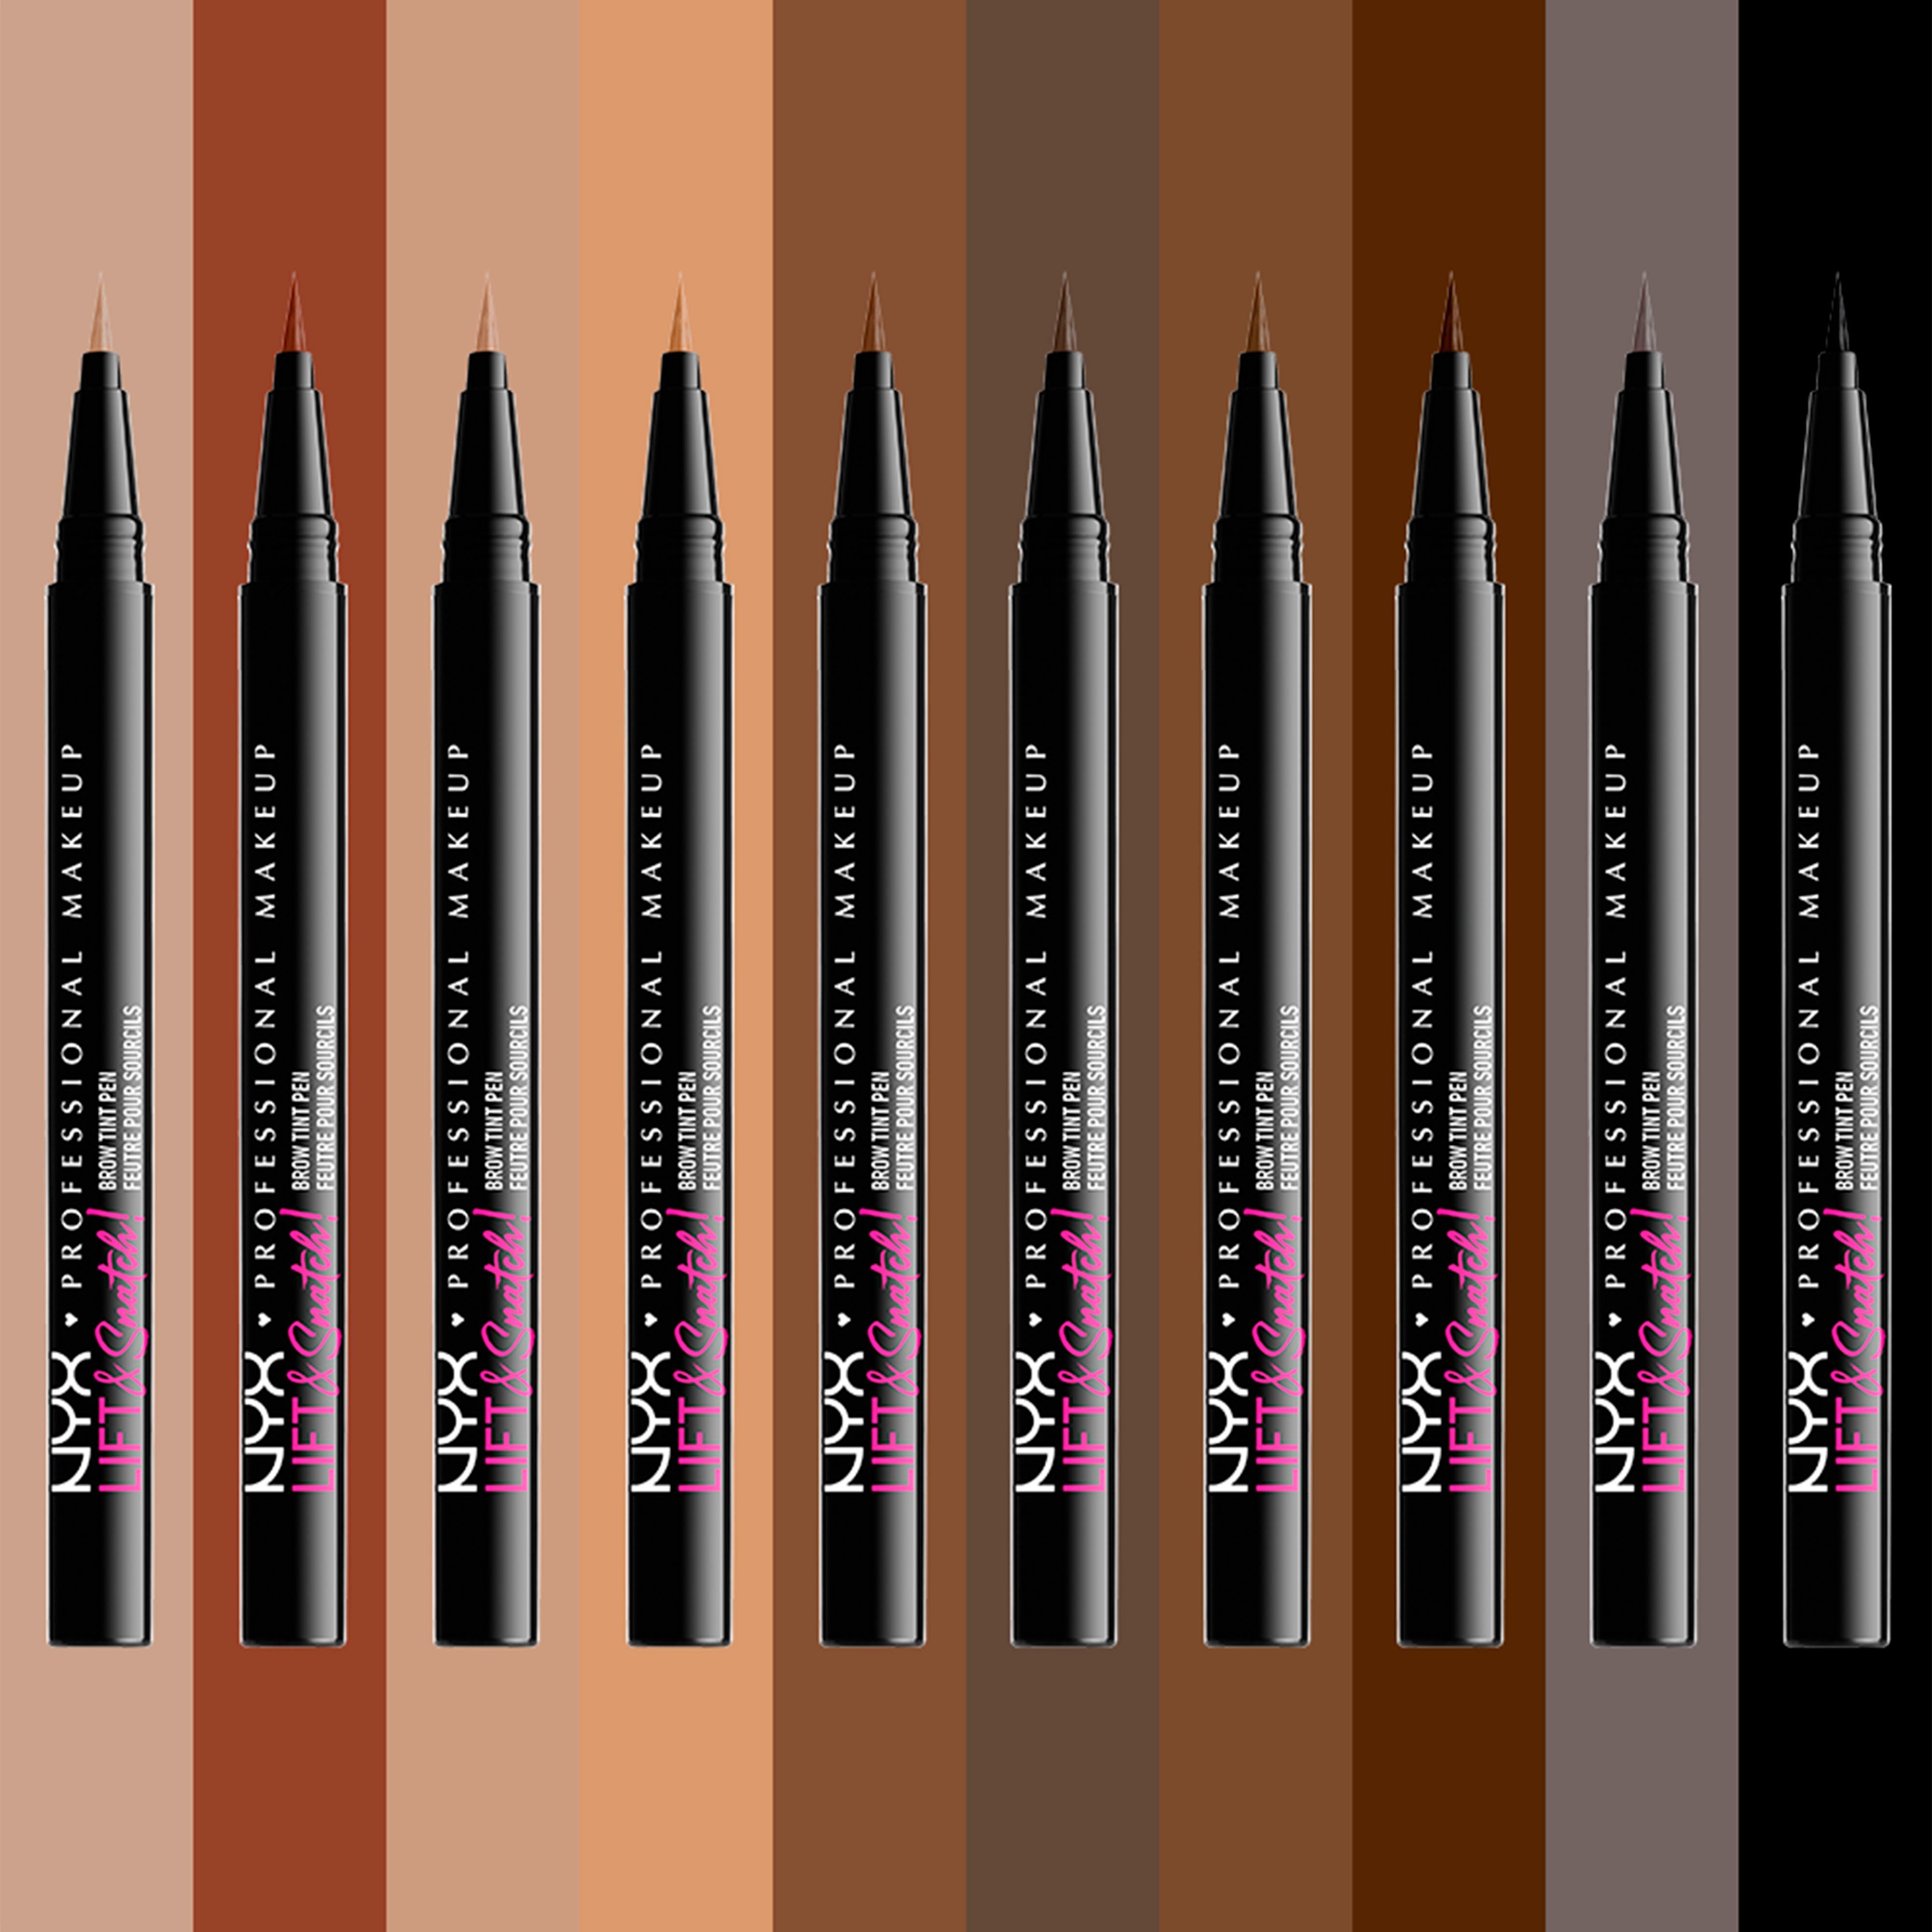 NYX Augenbrauen-Stift brown Pen Brow Tint Lift Makeup ash Snatch & Professional